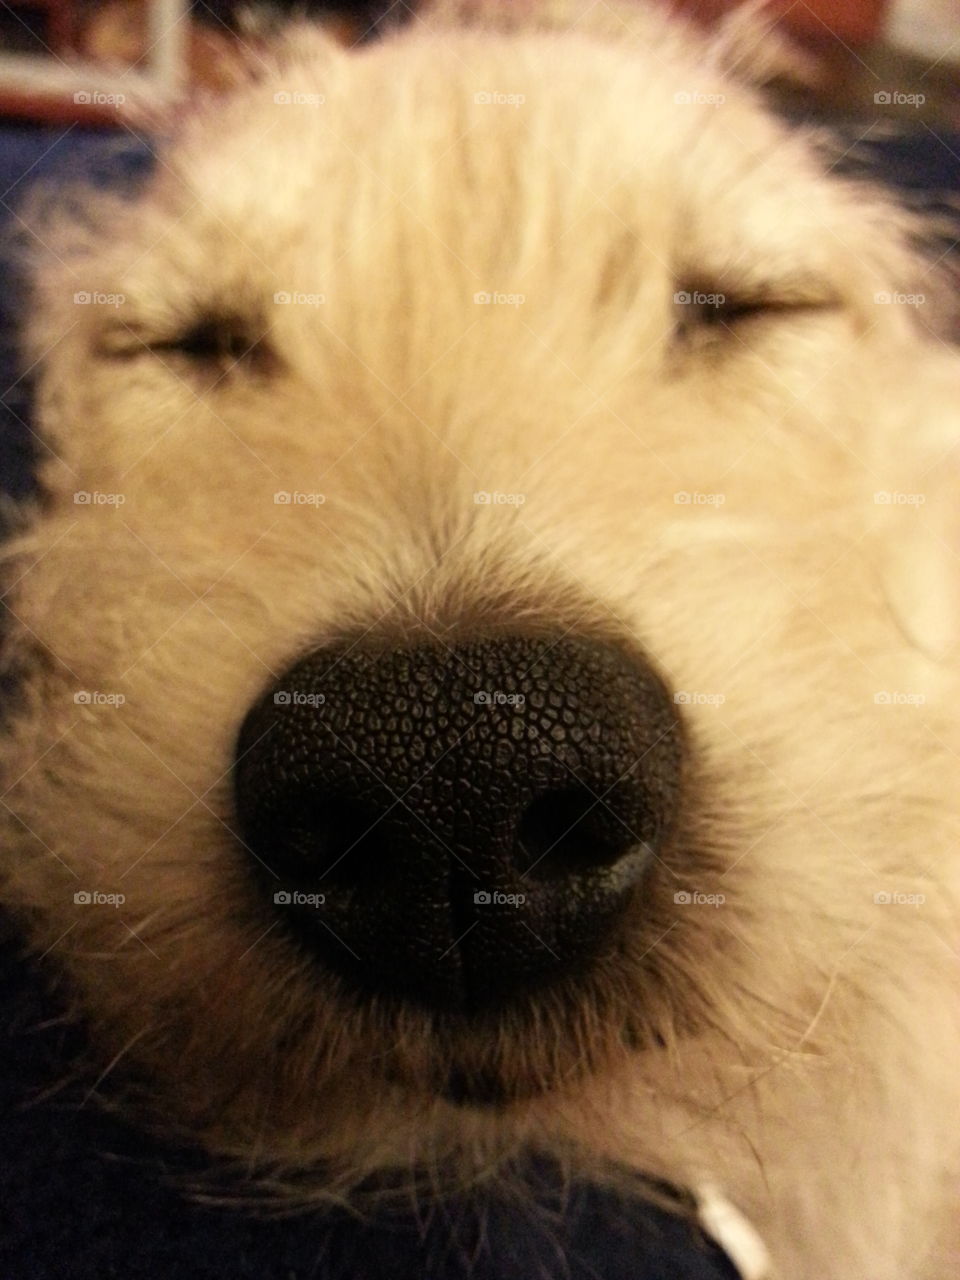 The Nose. Sleepin' Pup